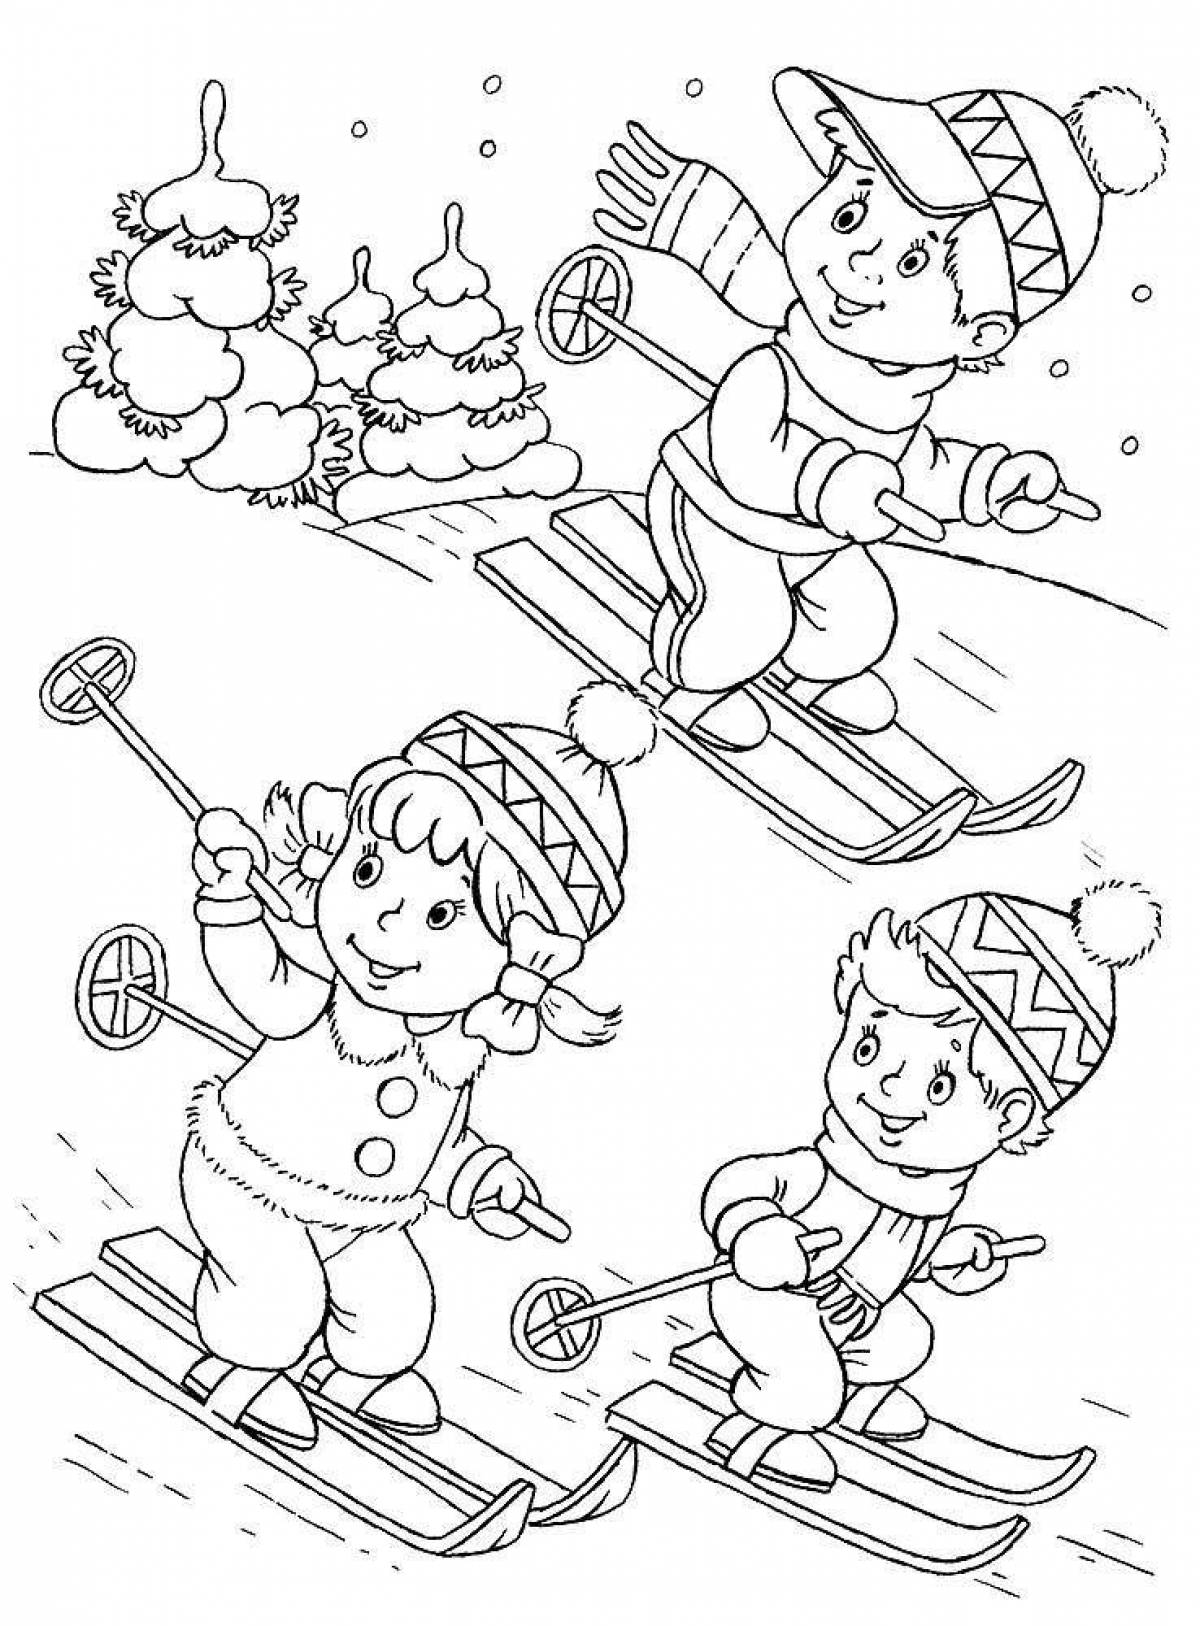 Impressive winter sports coloring page